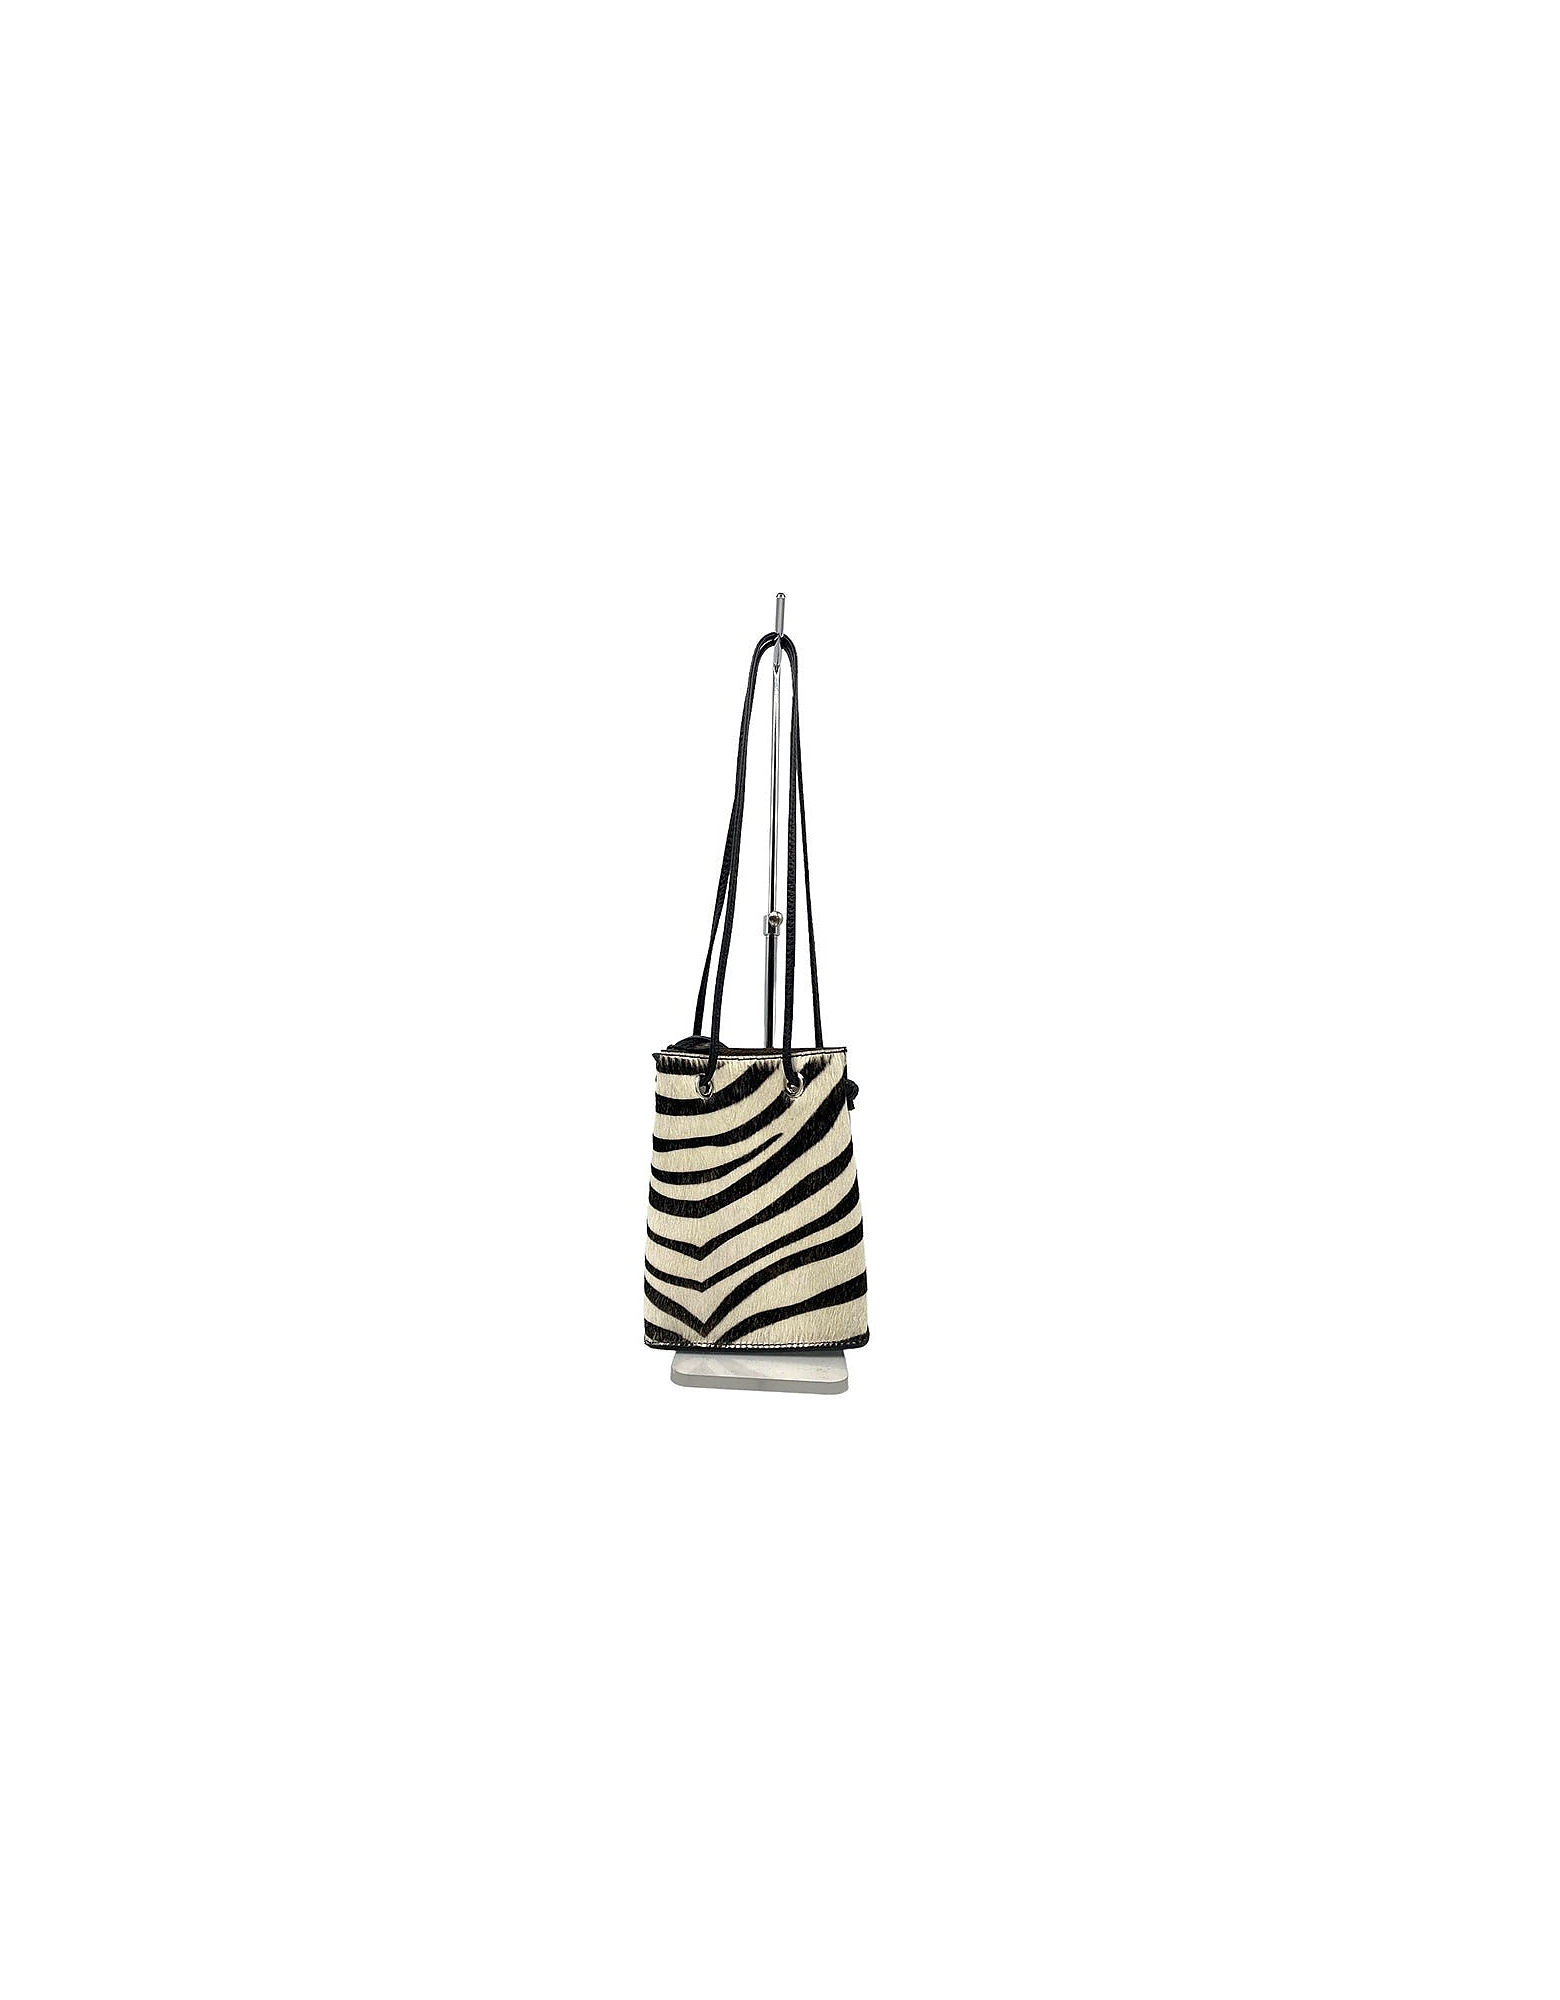 Marco Masi Designer Handbags 3186 - Shoulder Bag In Imprimé Animal